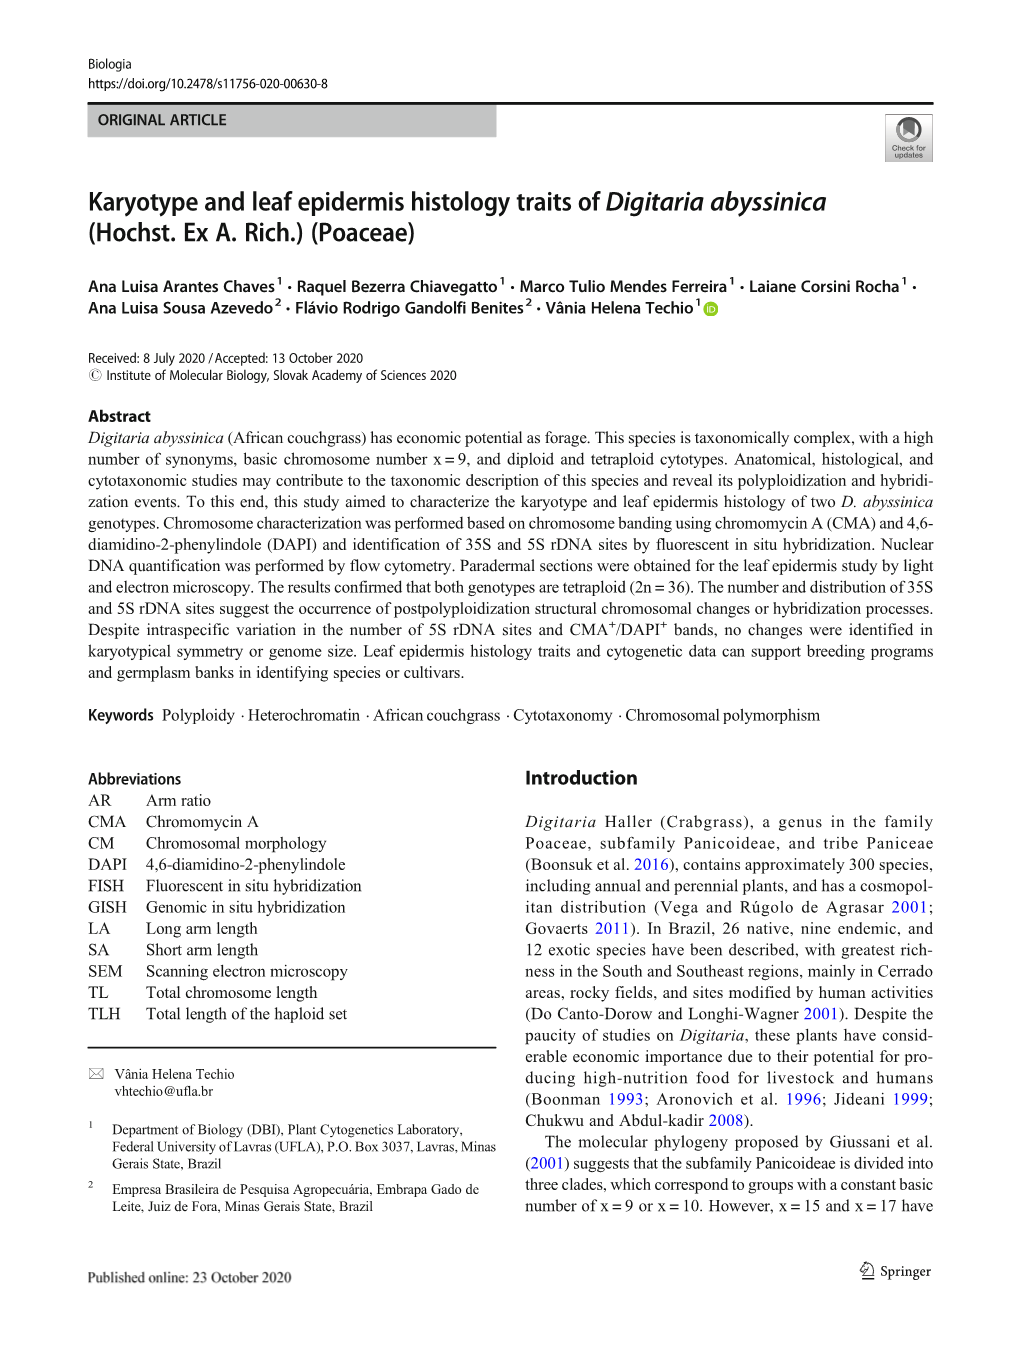 Karyotype and Leaf Epidermis Histology Traits of Digitaria Abyssinica (Hochst